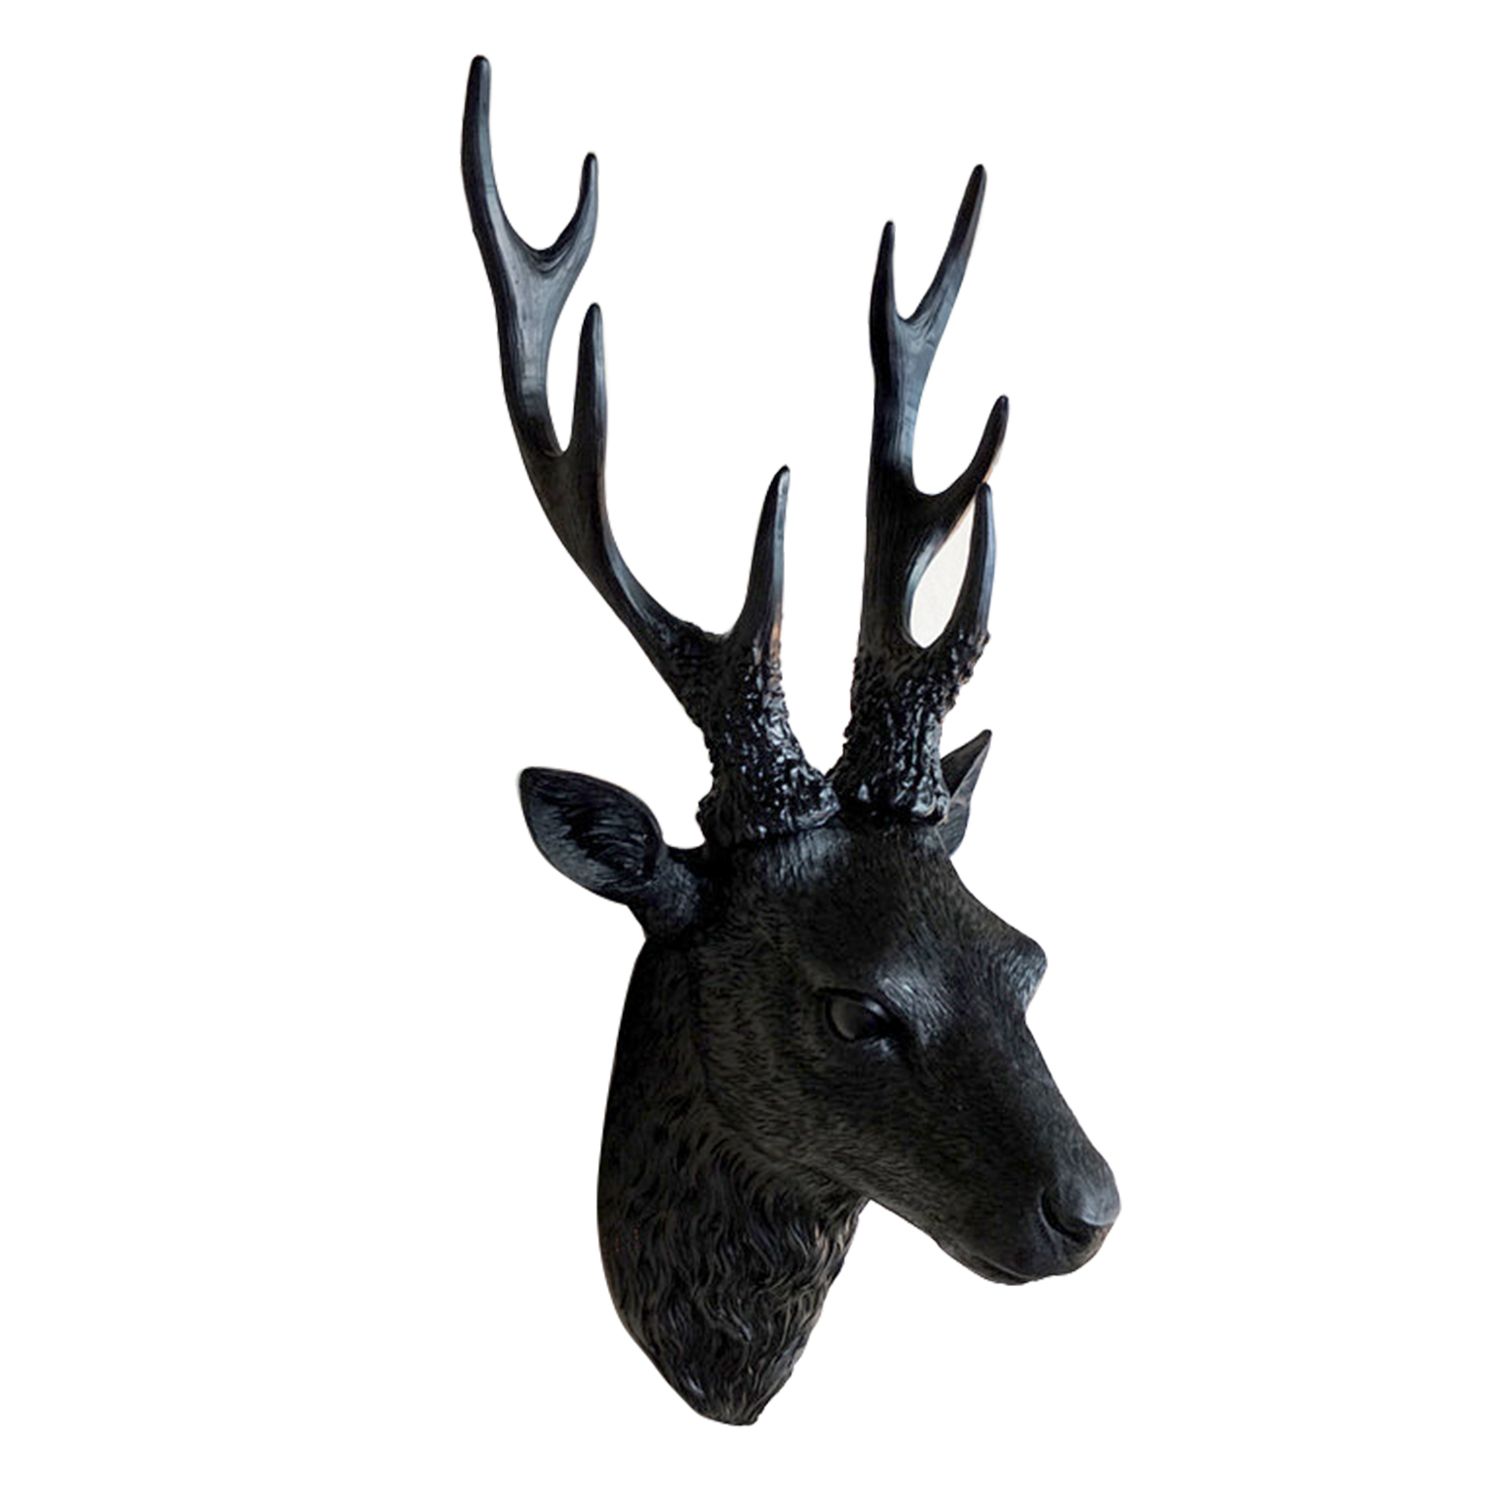 DEER Wall Trophy -Sculpture- (Wooden animal head trophies)